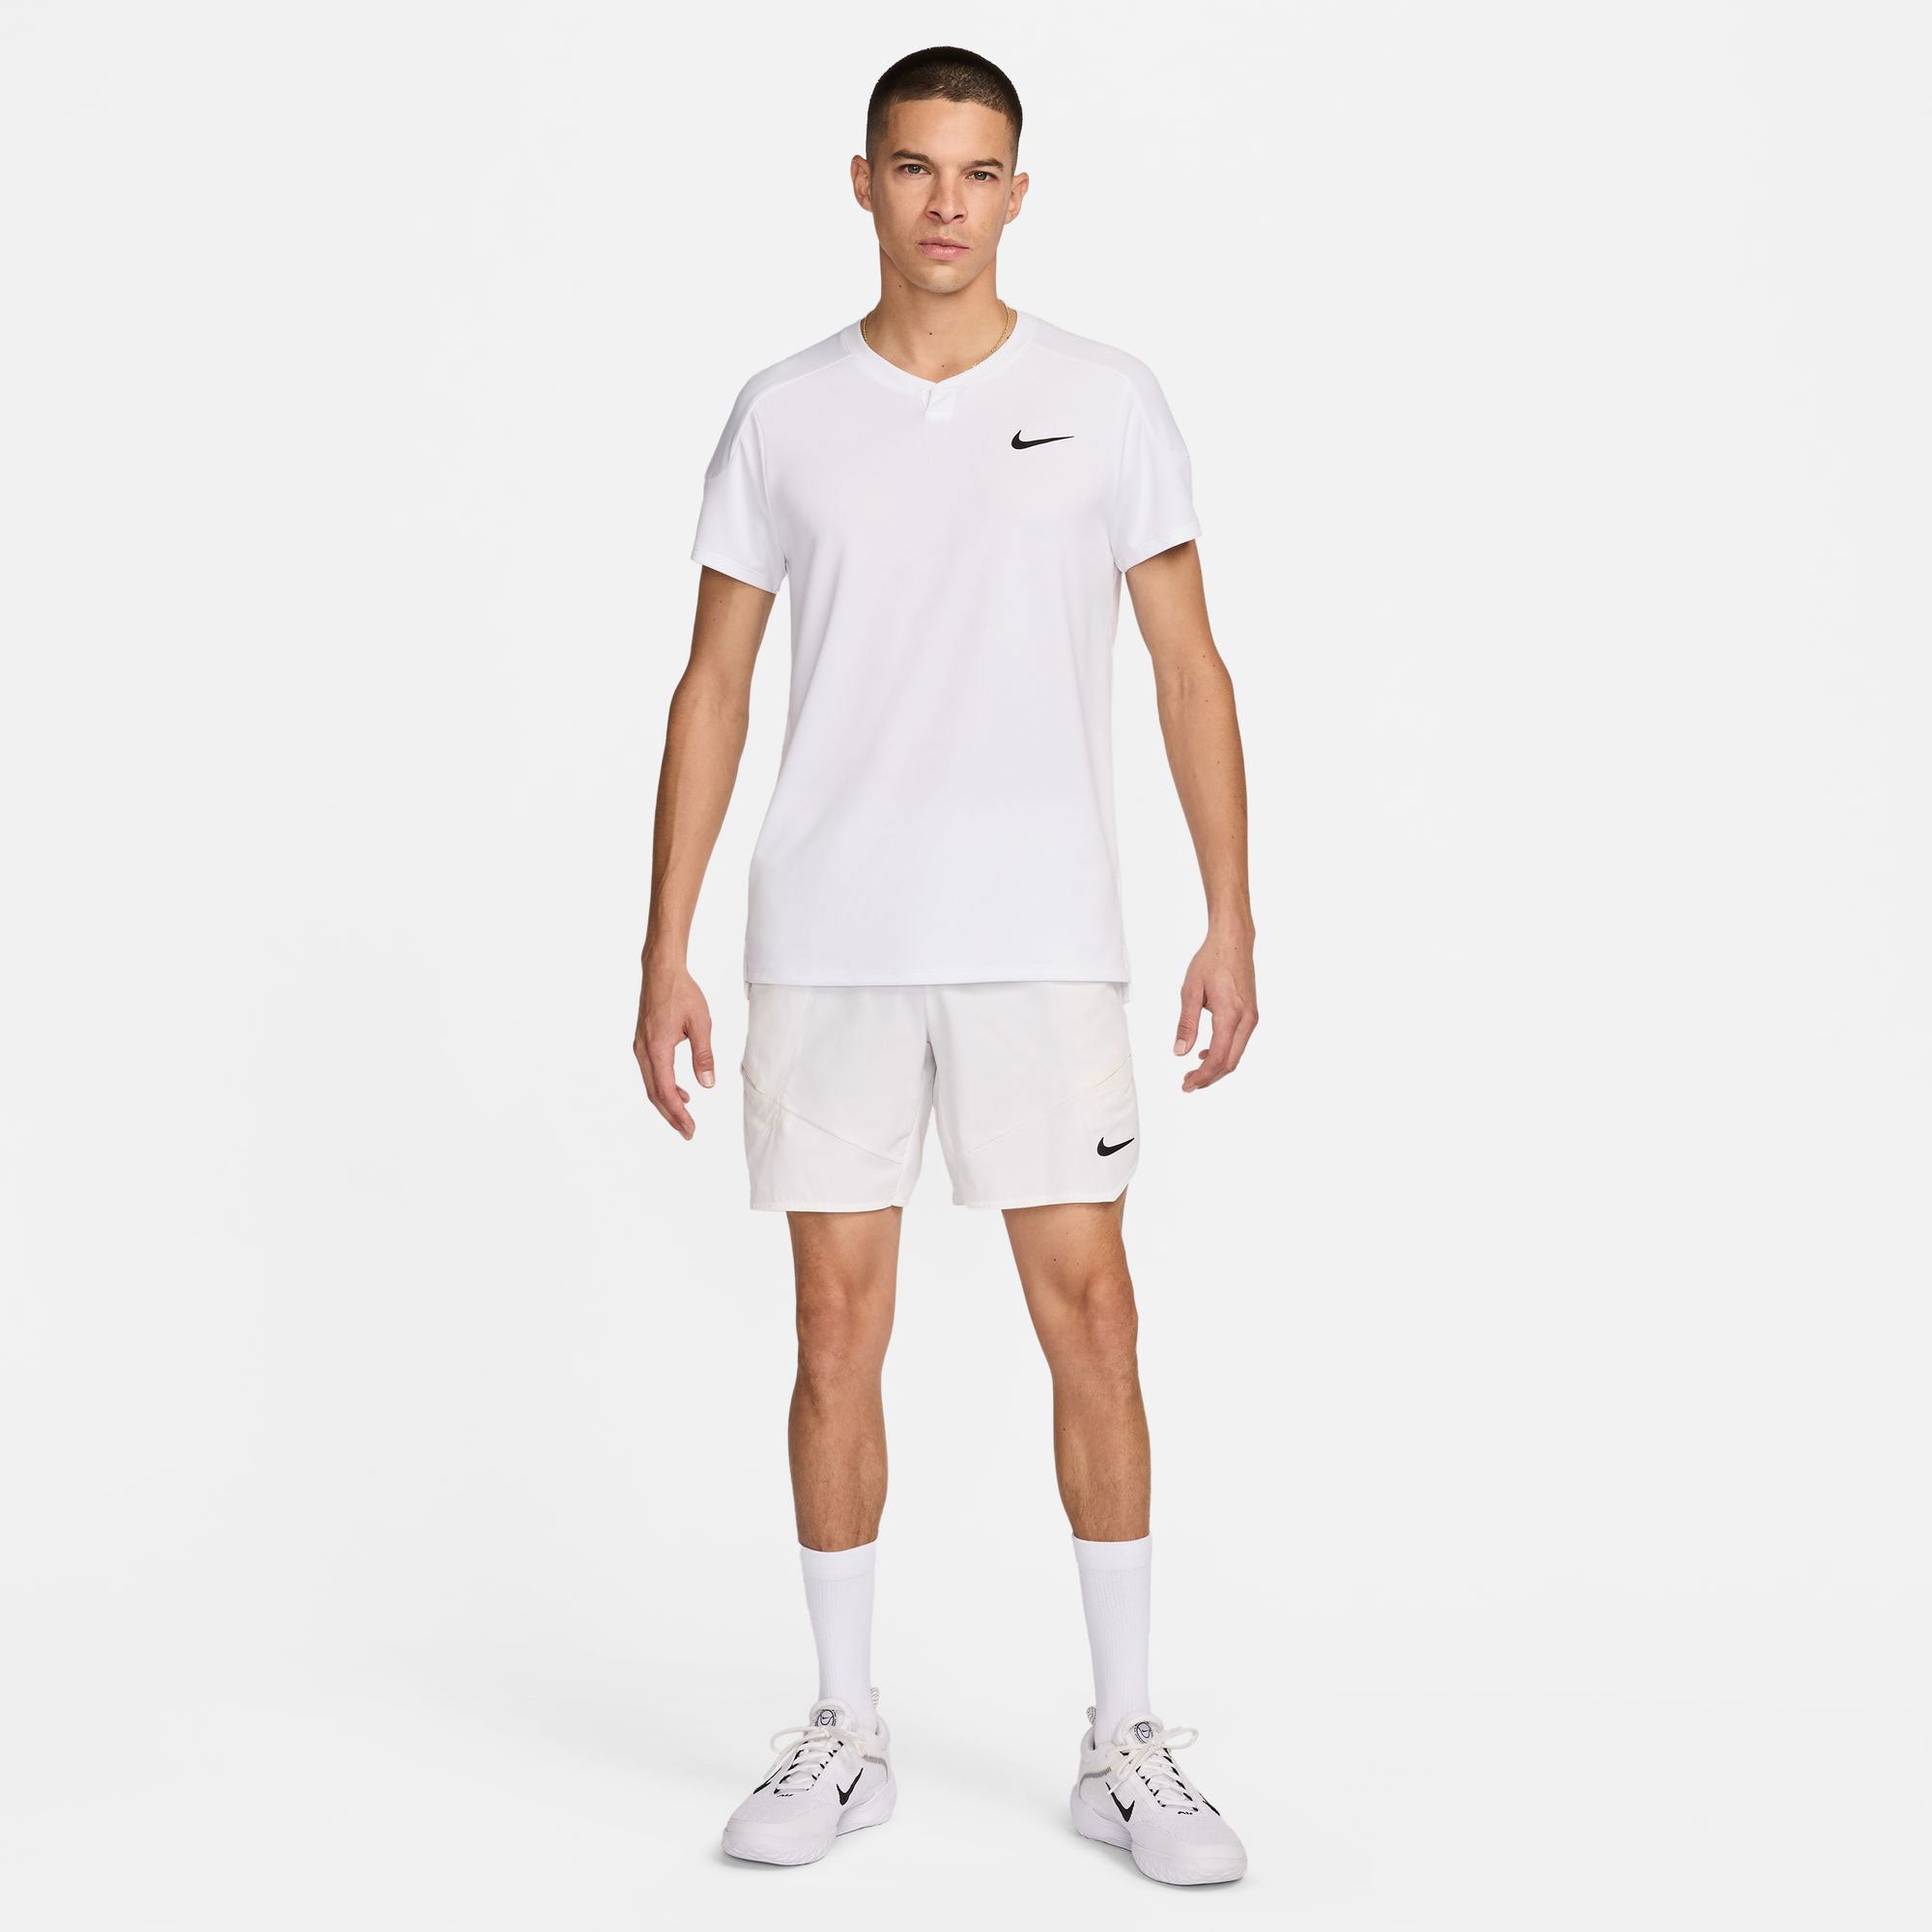 NikeCourt Slam London Men's Dri-FIT Tennis Shirt - White (7)